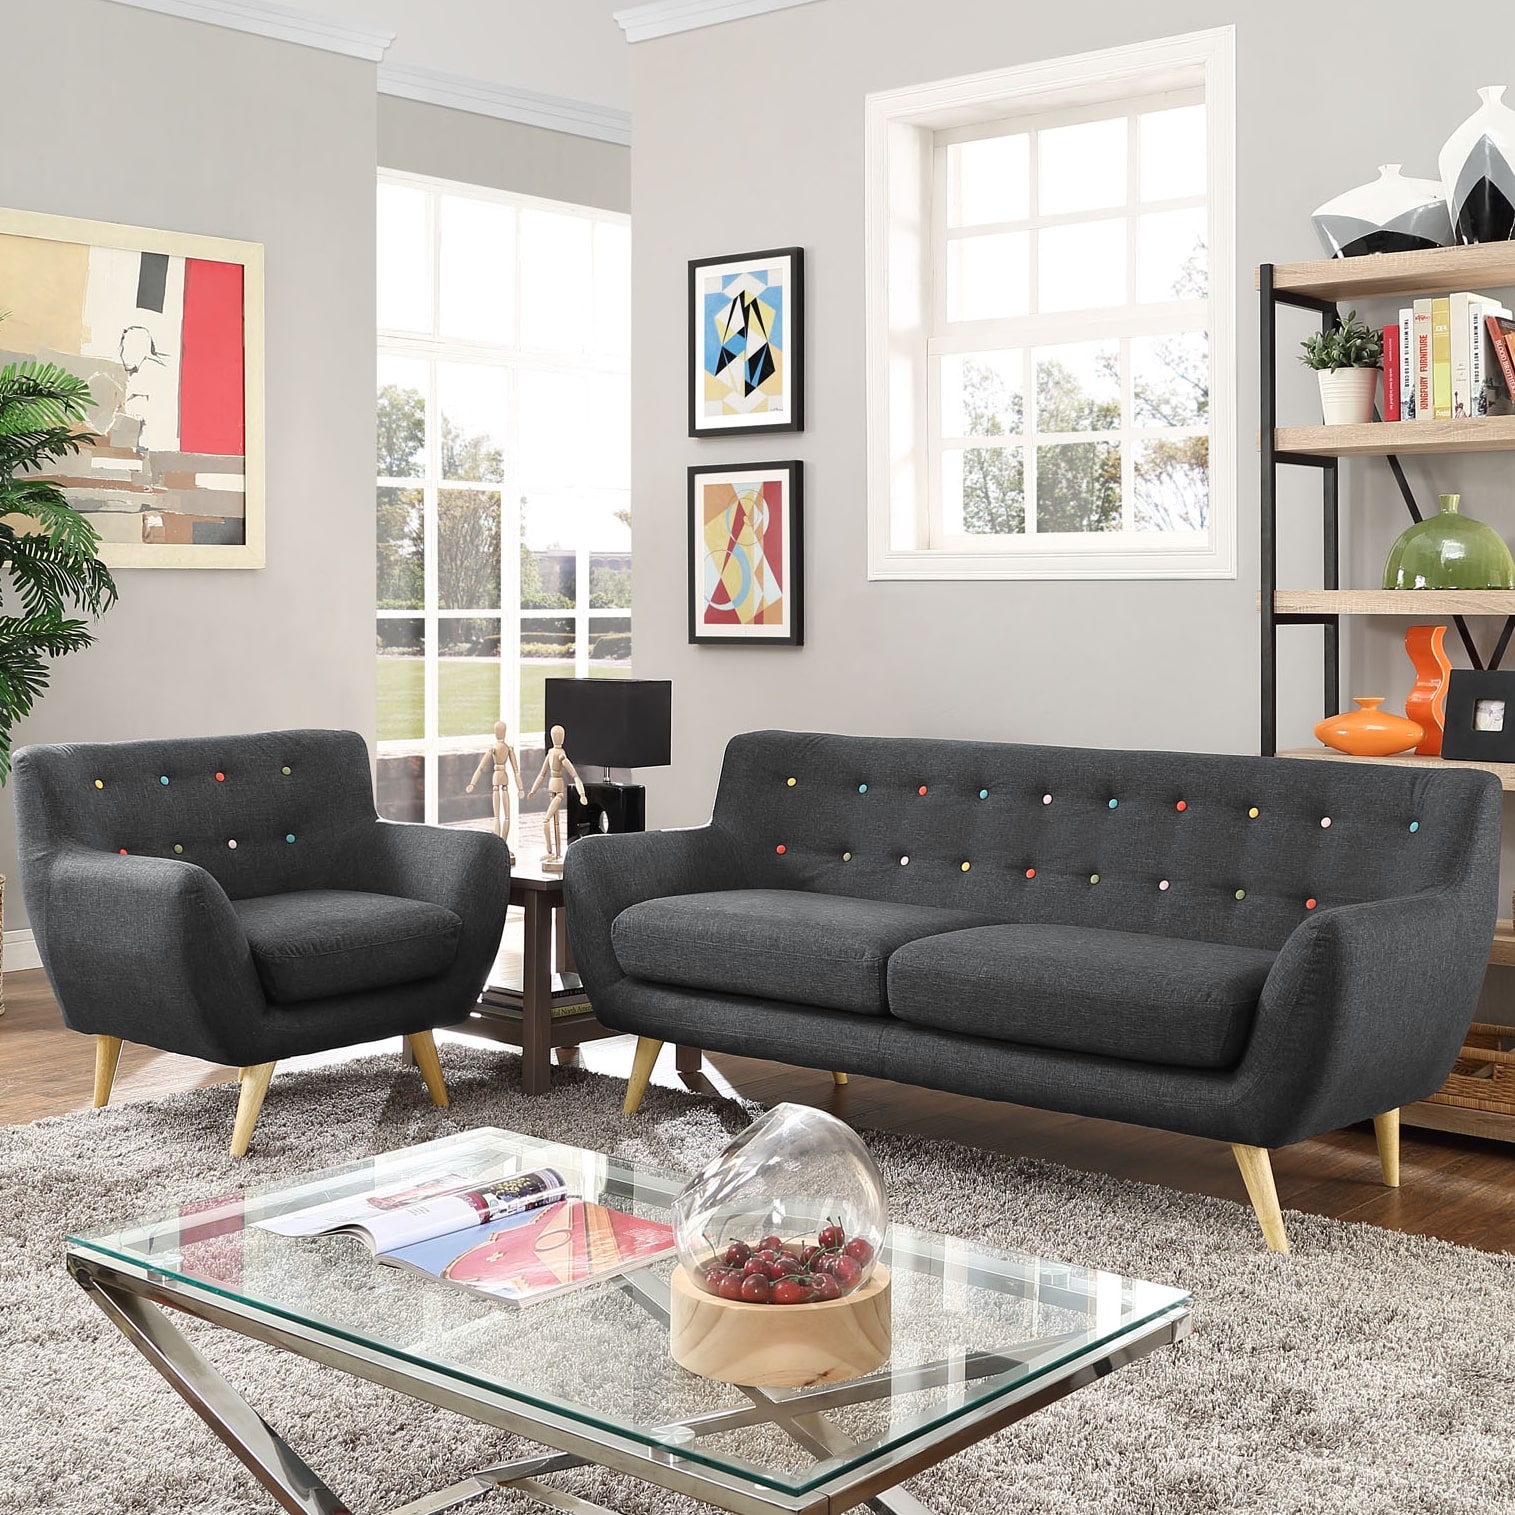 Sofa Minimalis Terbaru Terlaris 2020